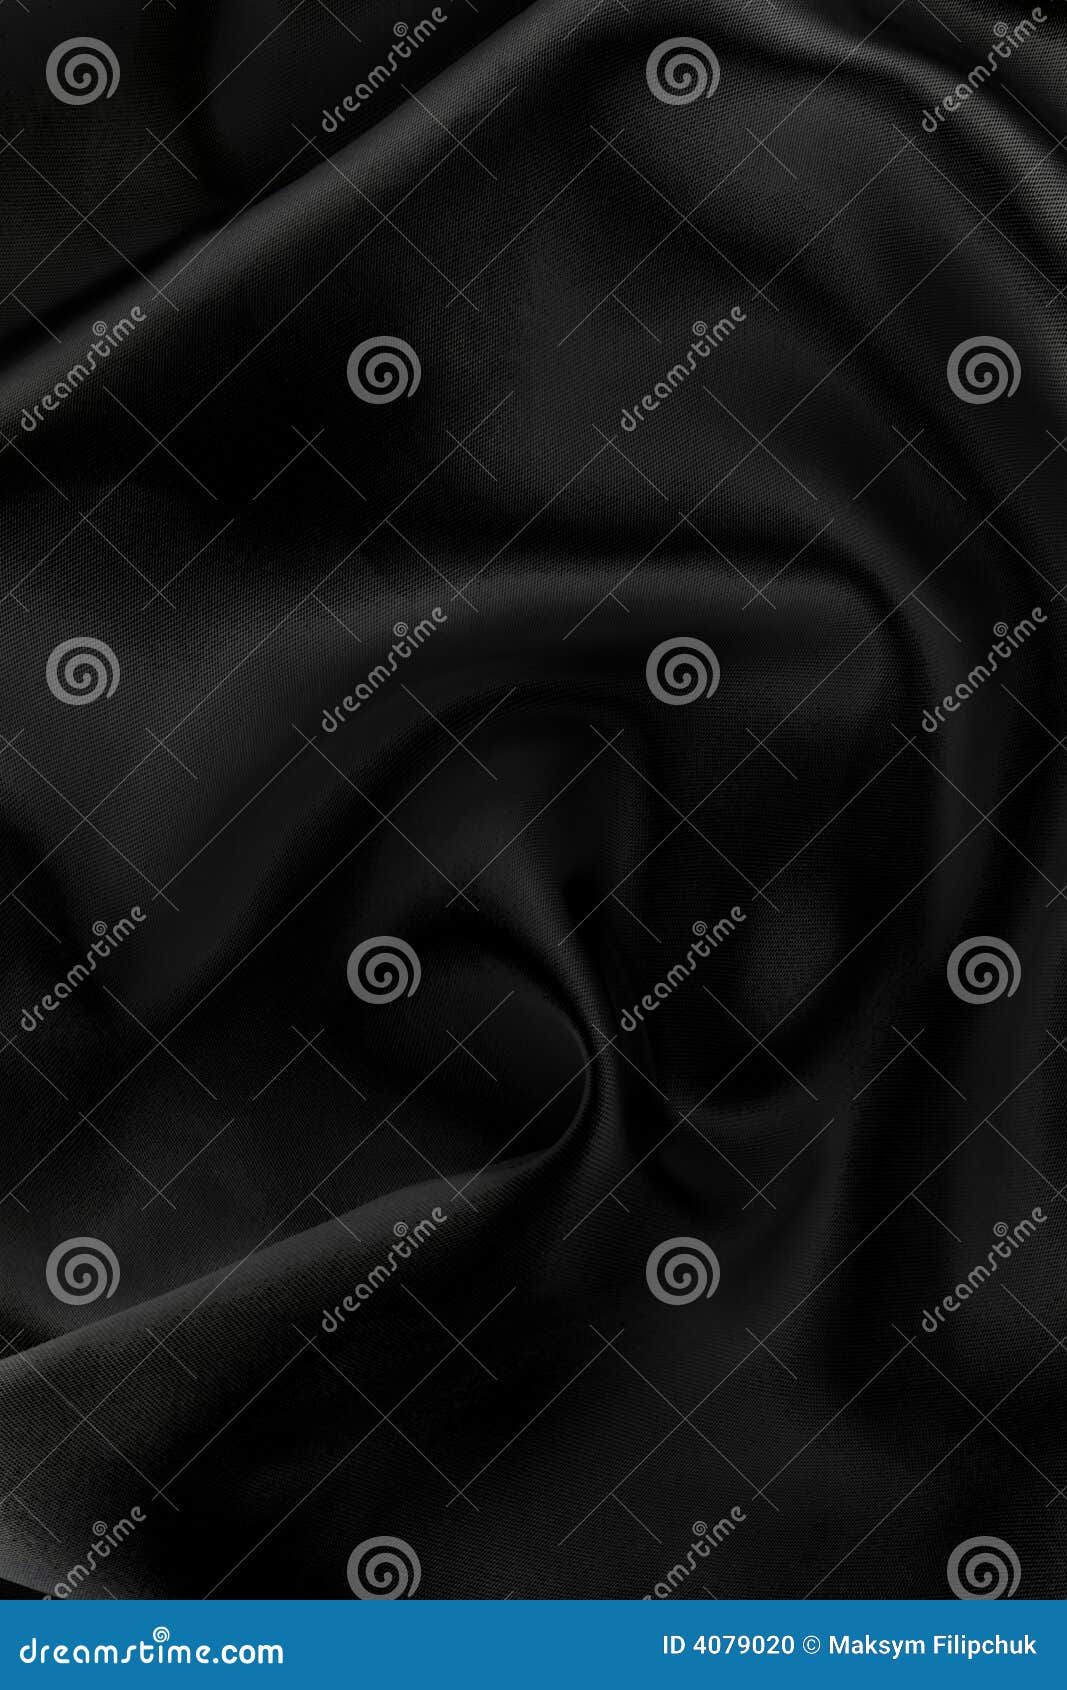 majestic black textile background